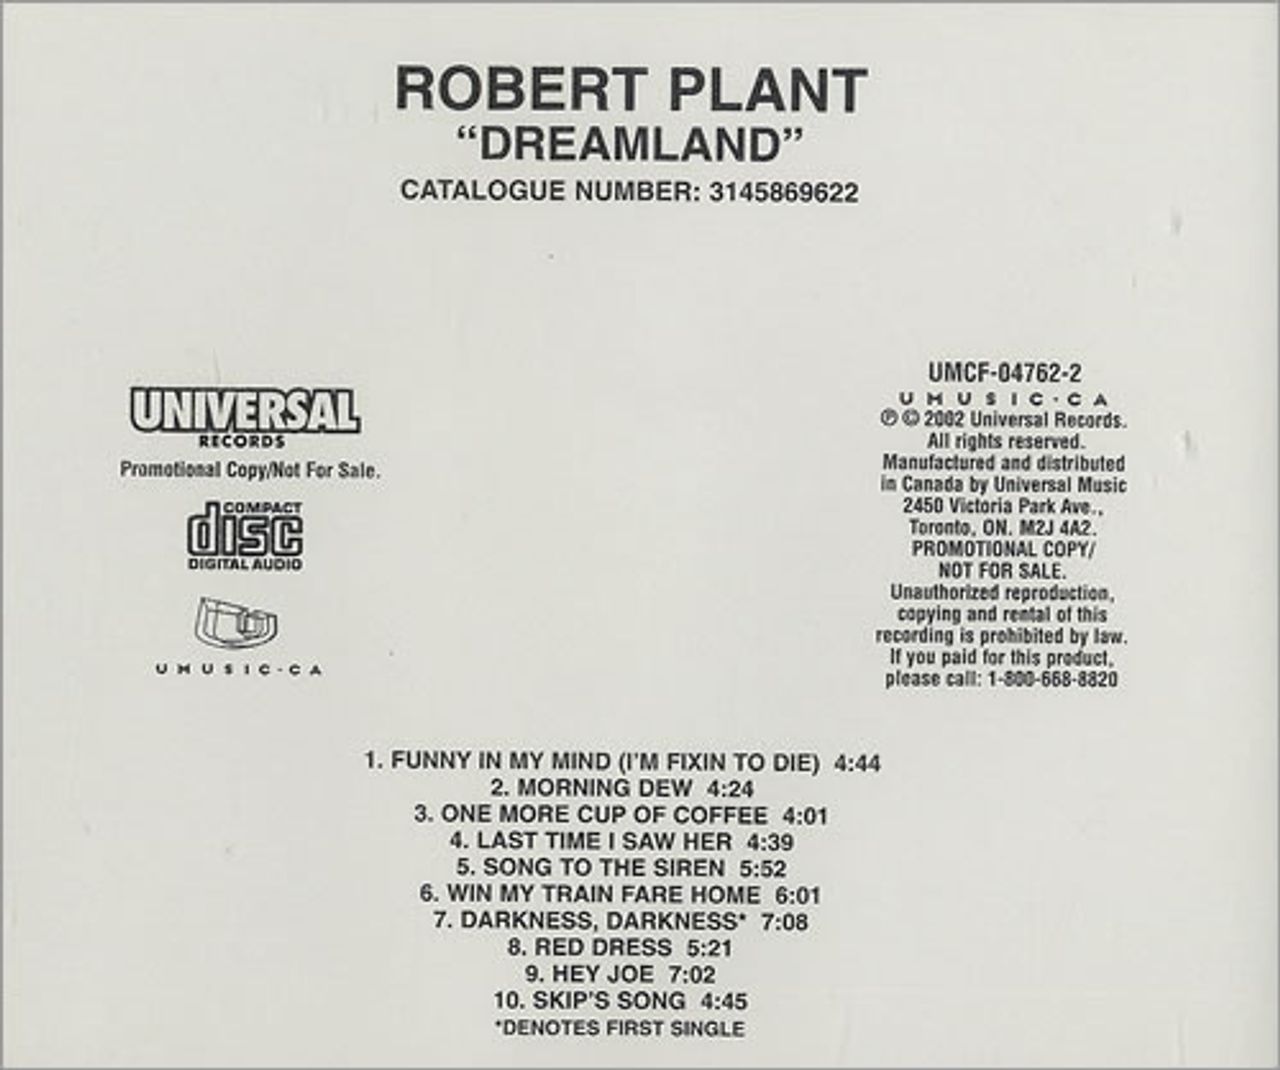 Robert Plant Canadian CD album RareVinyl.com